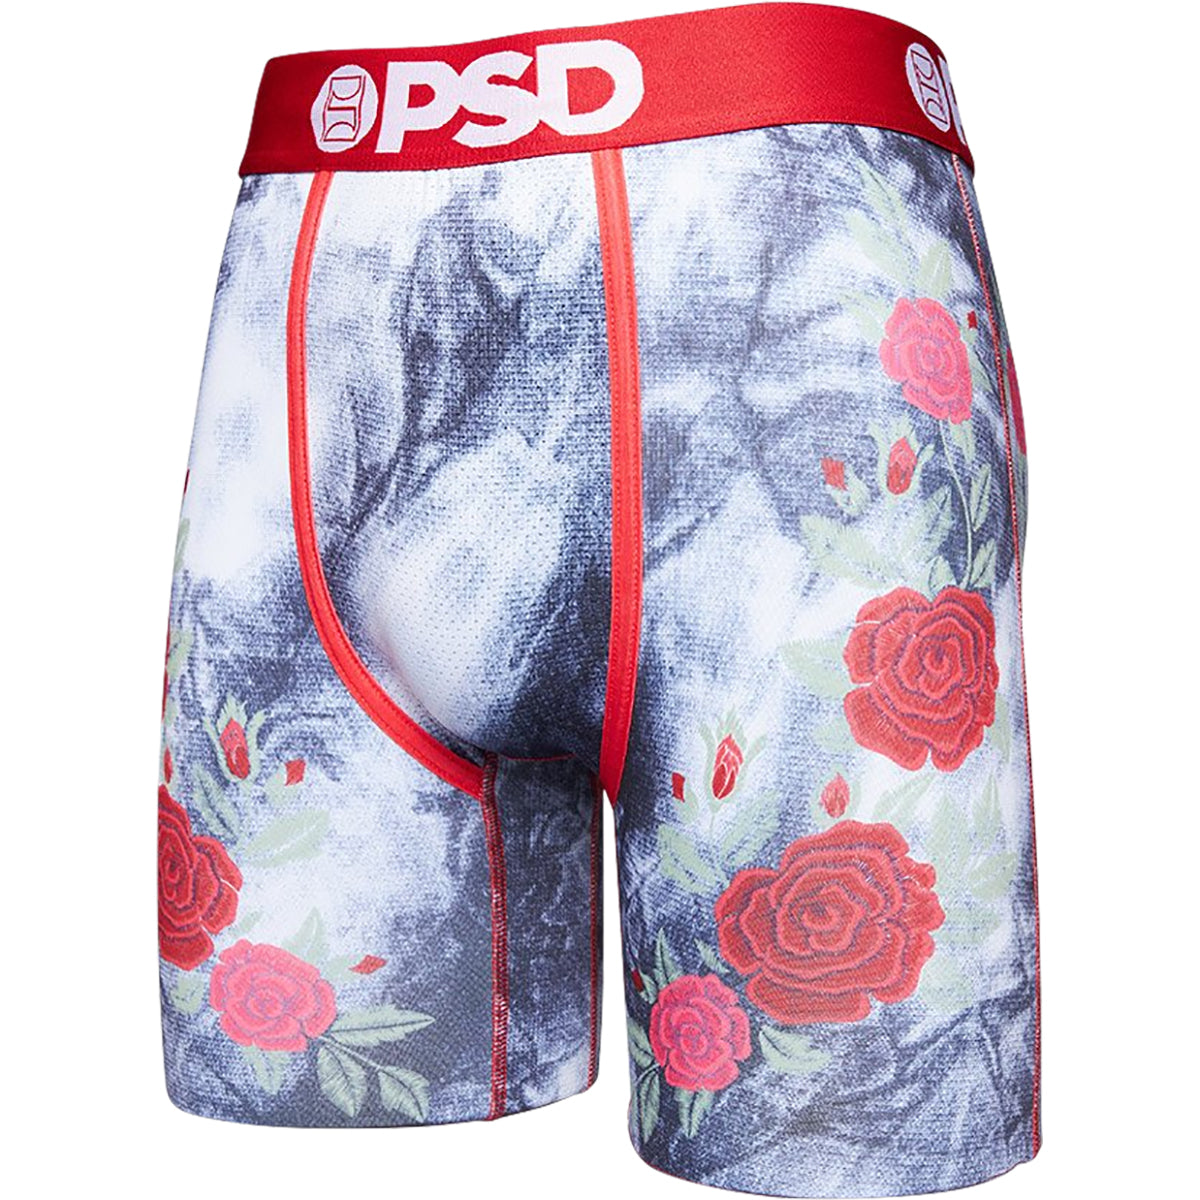 Shop All  PSD Underwear - Men's, Women's, & Youth Styles – tagged